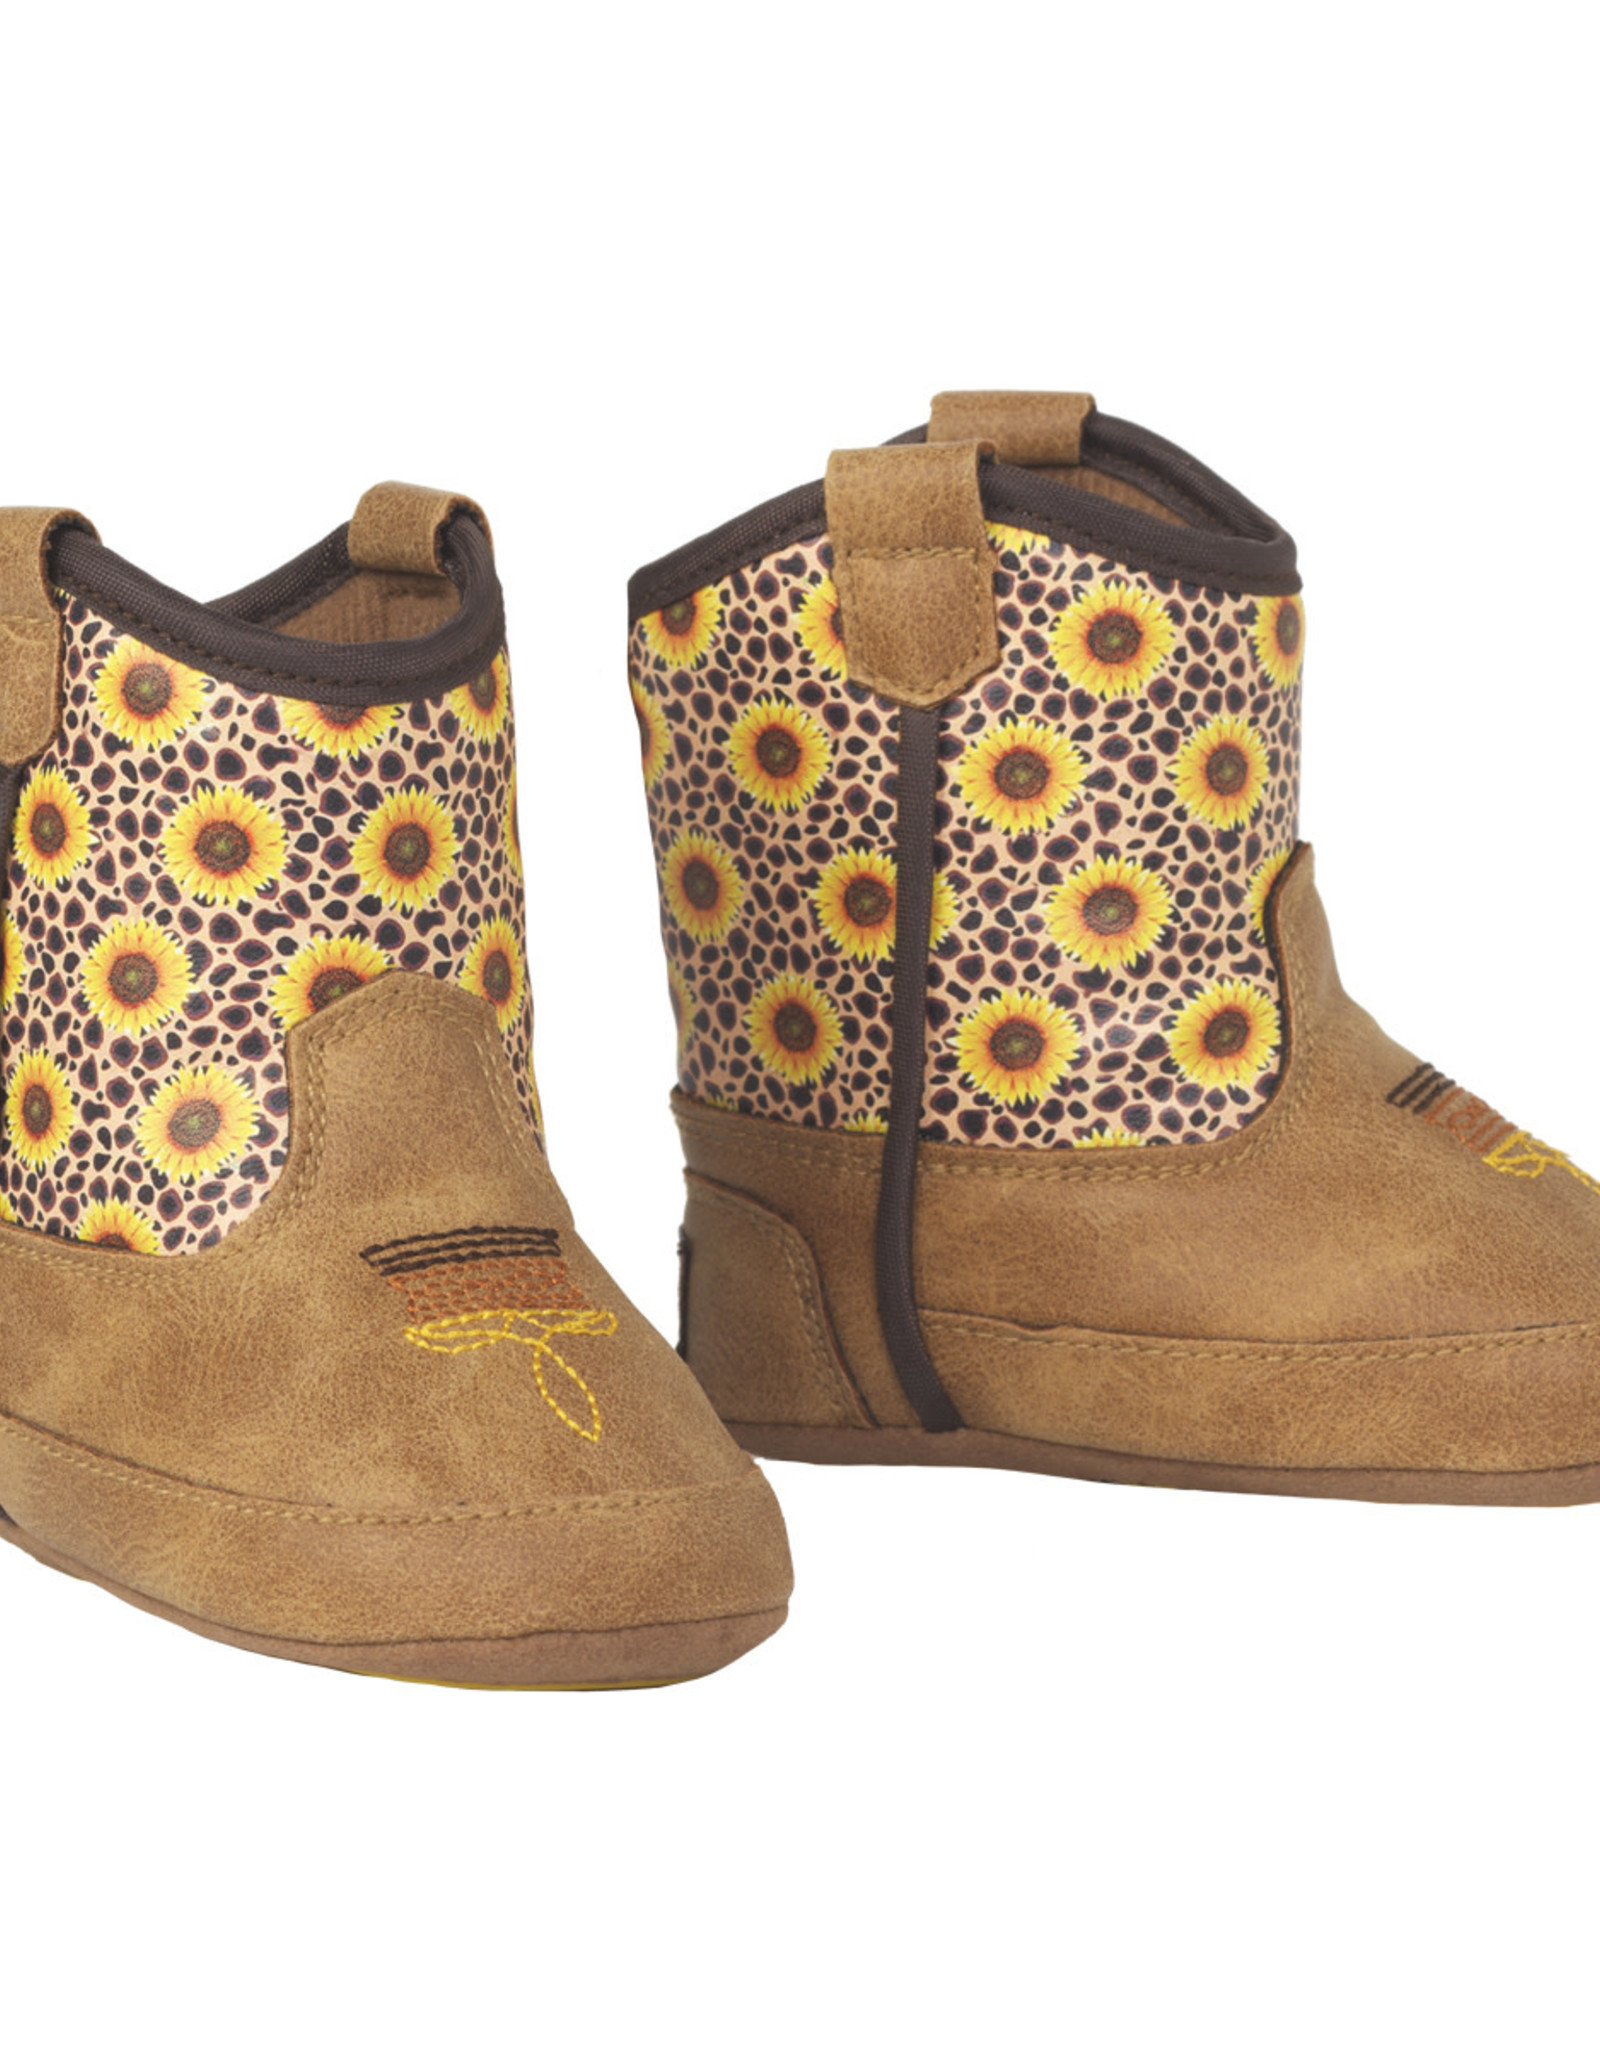 Sunnie Sunflower Cheetah Baby Buckers Twister Infant Cowboy Boot